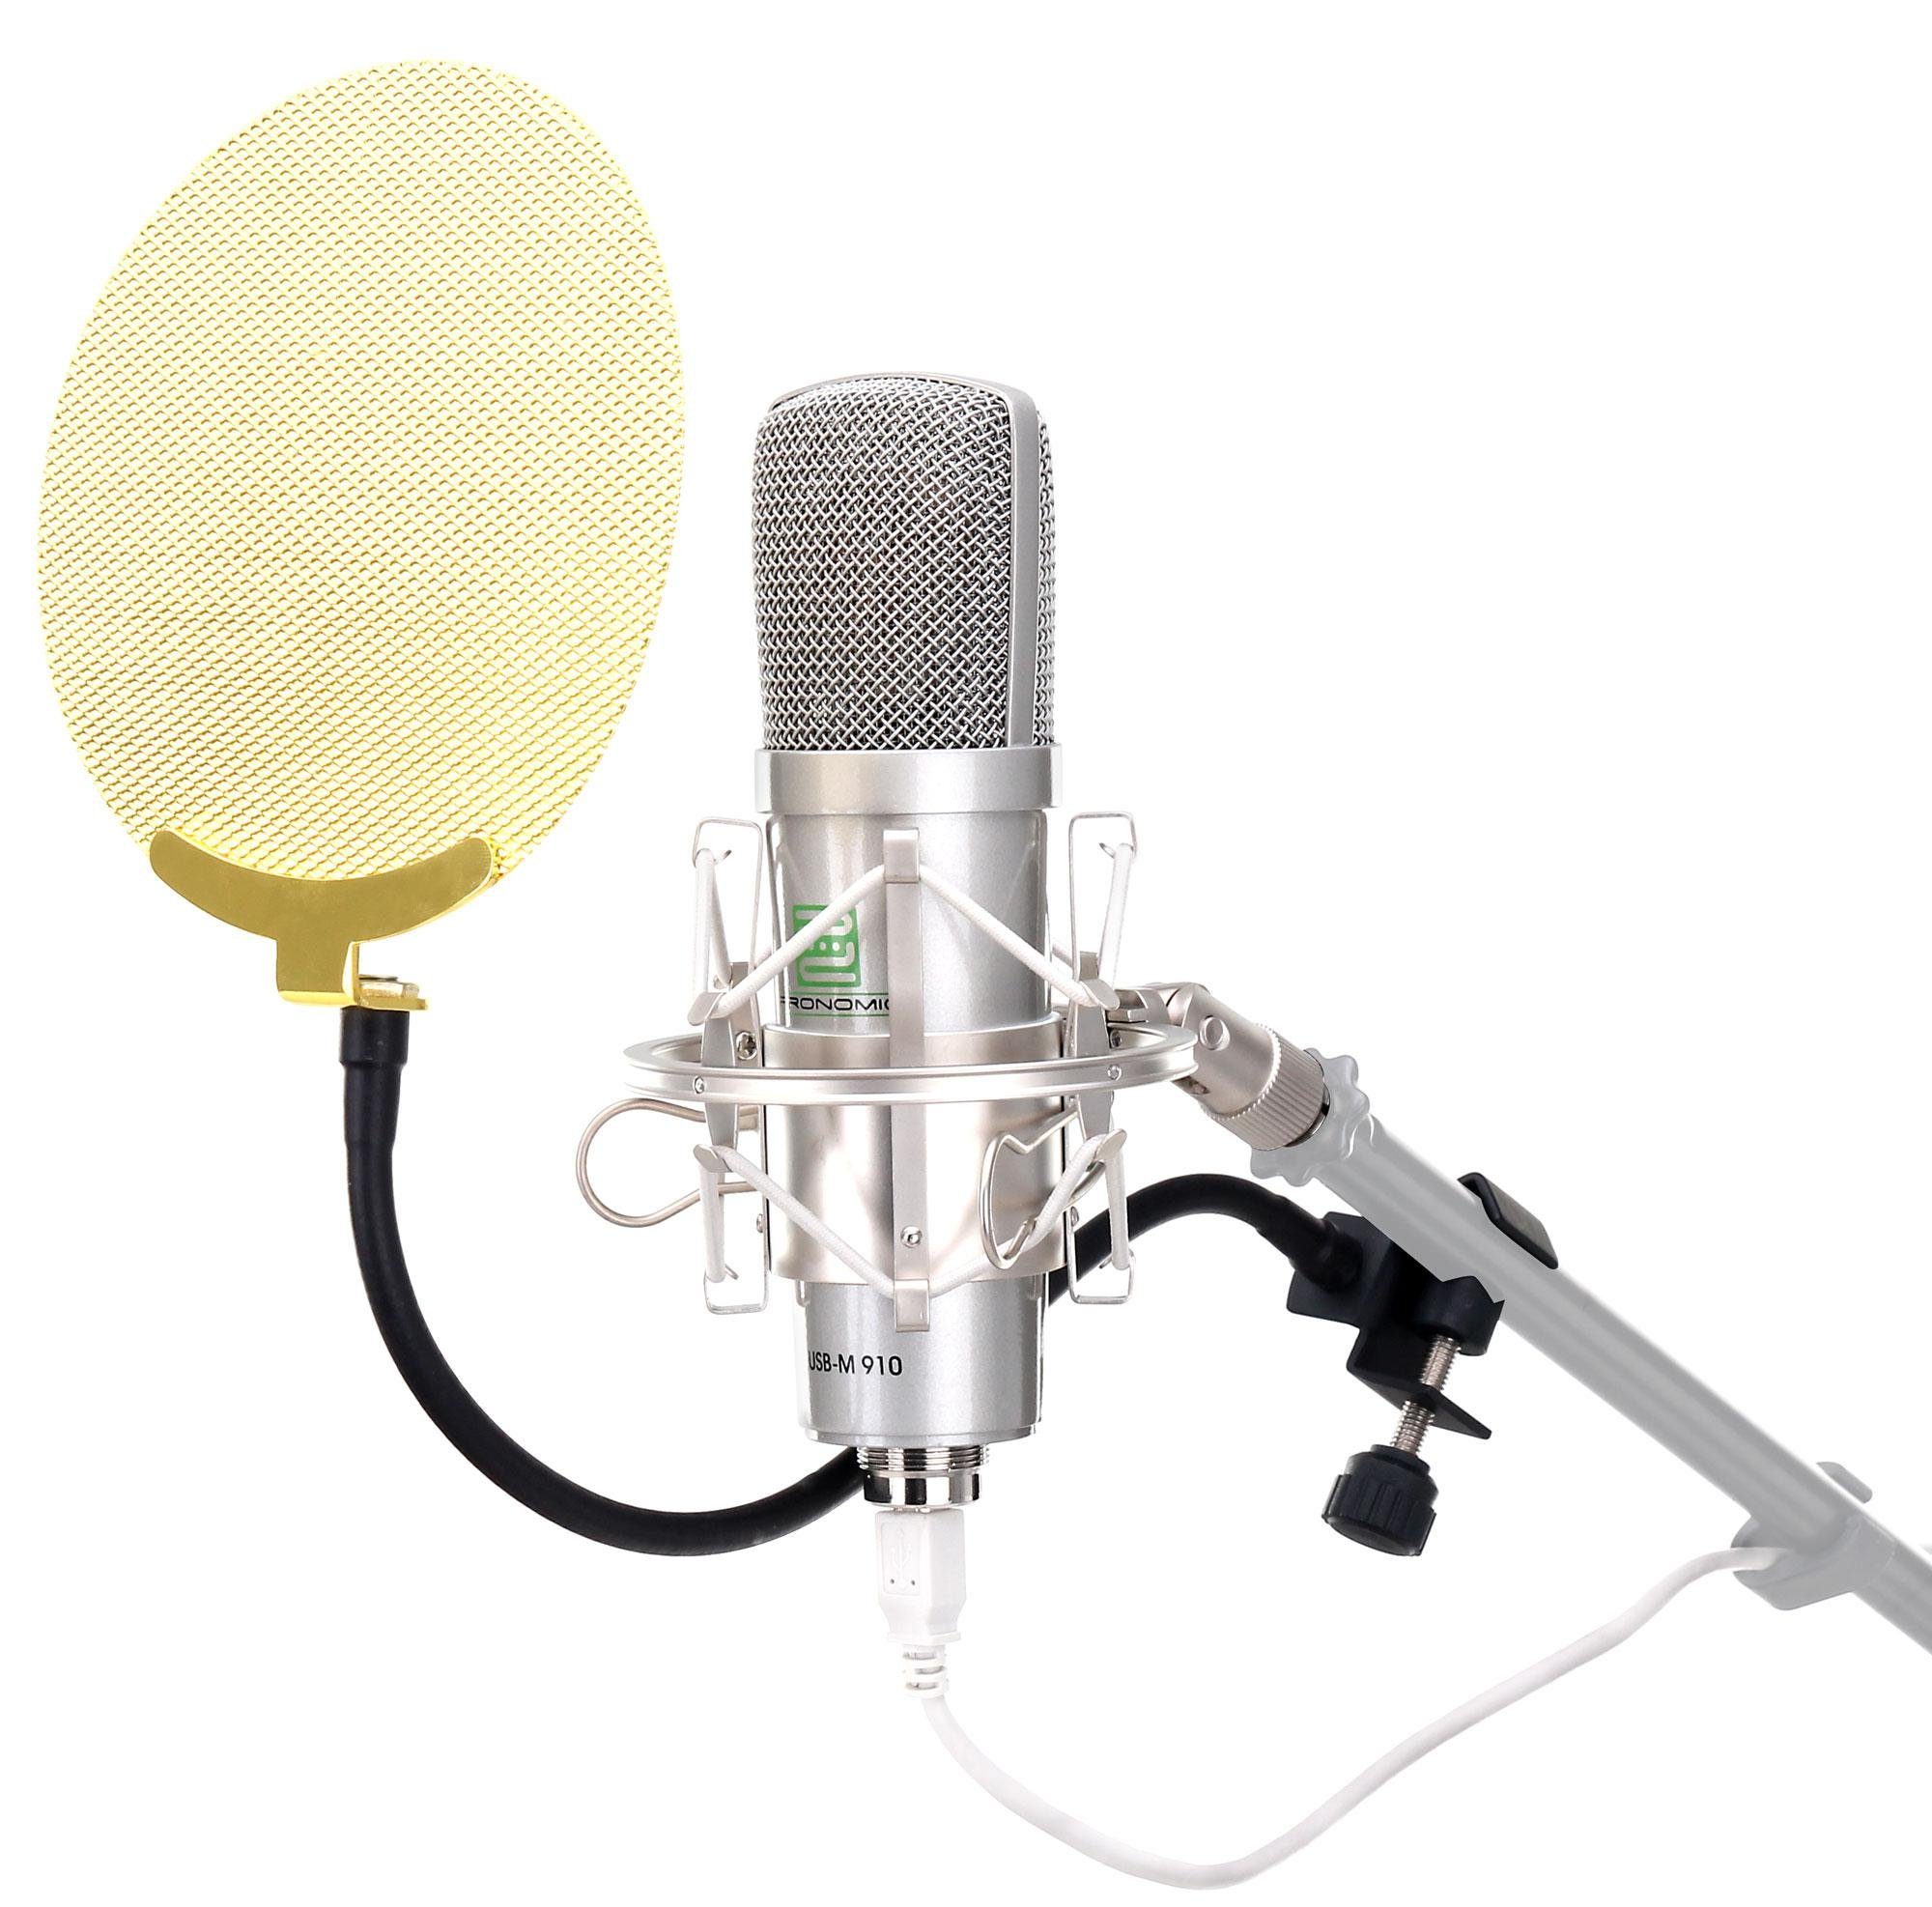 Pro Kondensator Mikrofon Set Professionell Komplett Set Für Studio Aufnahme Gold 